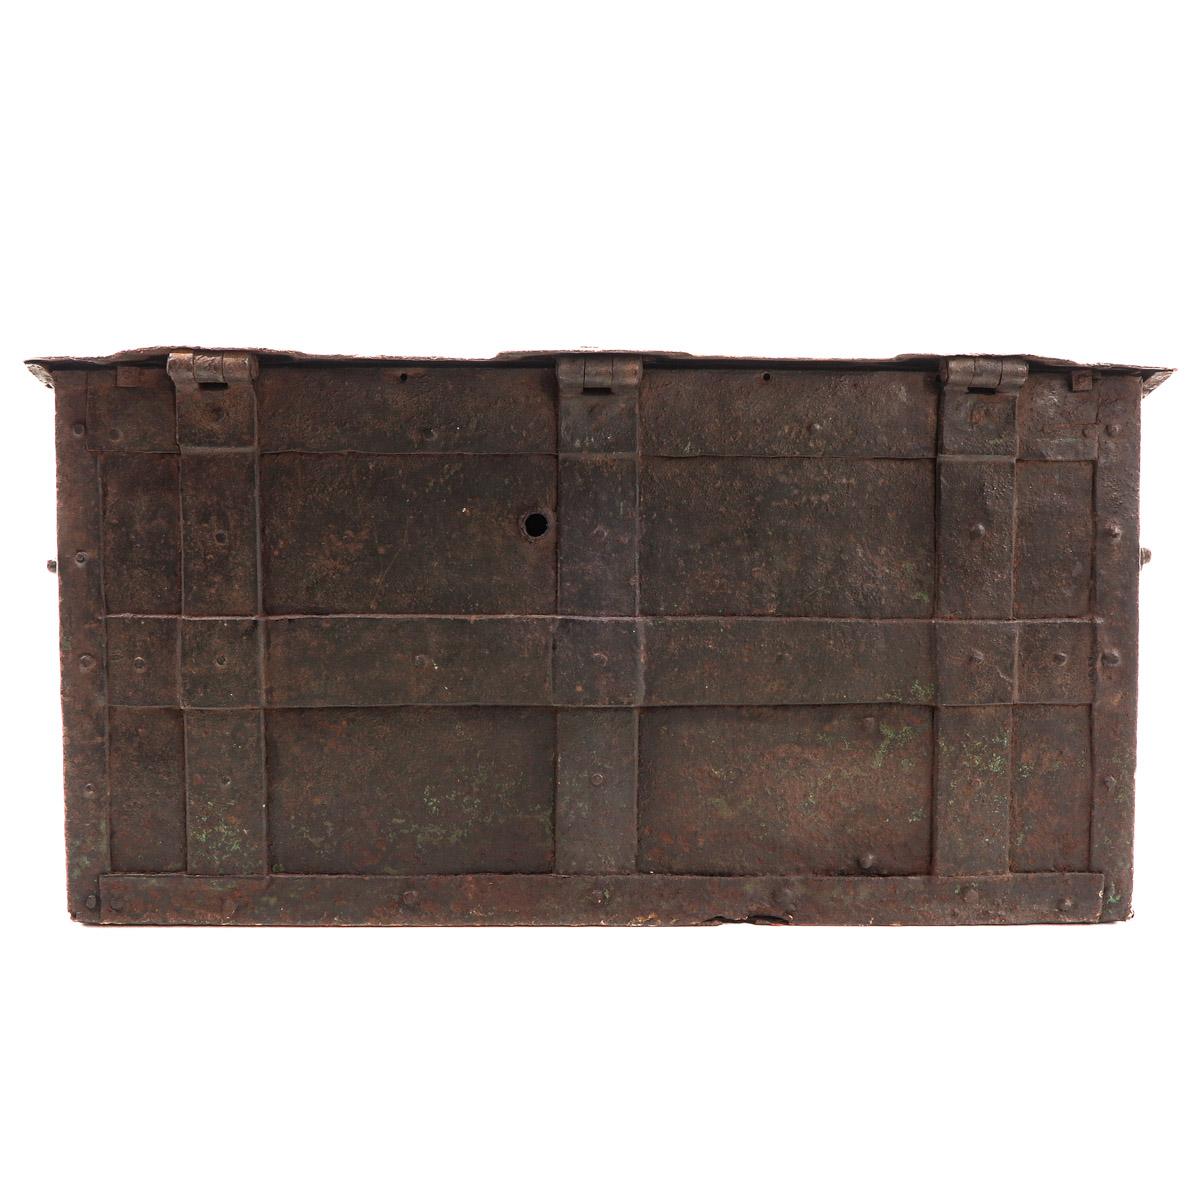 A Wrought Iron Treasure Box - Image 3 of 10